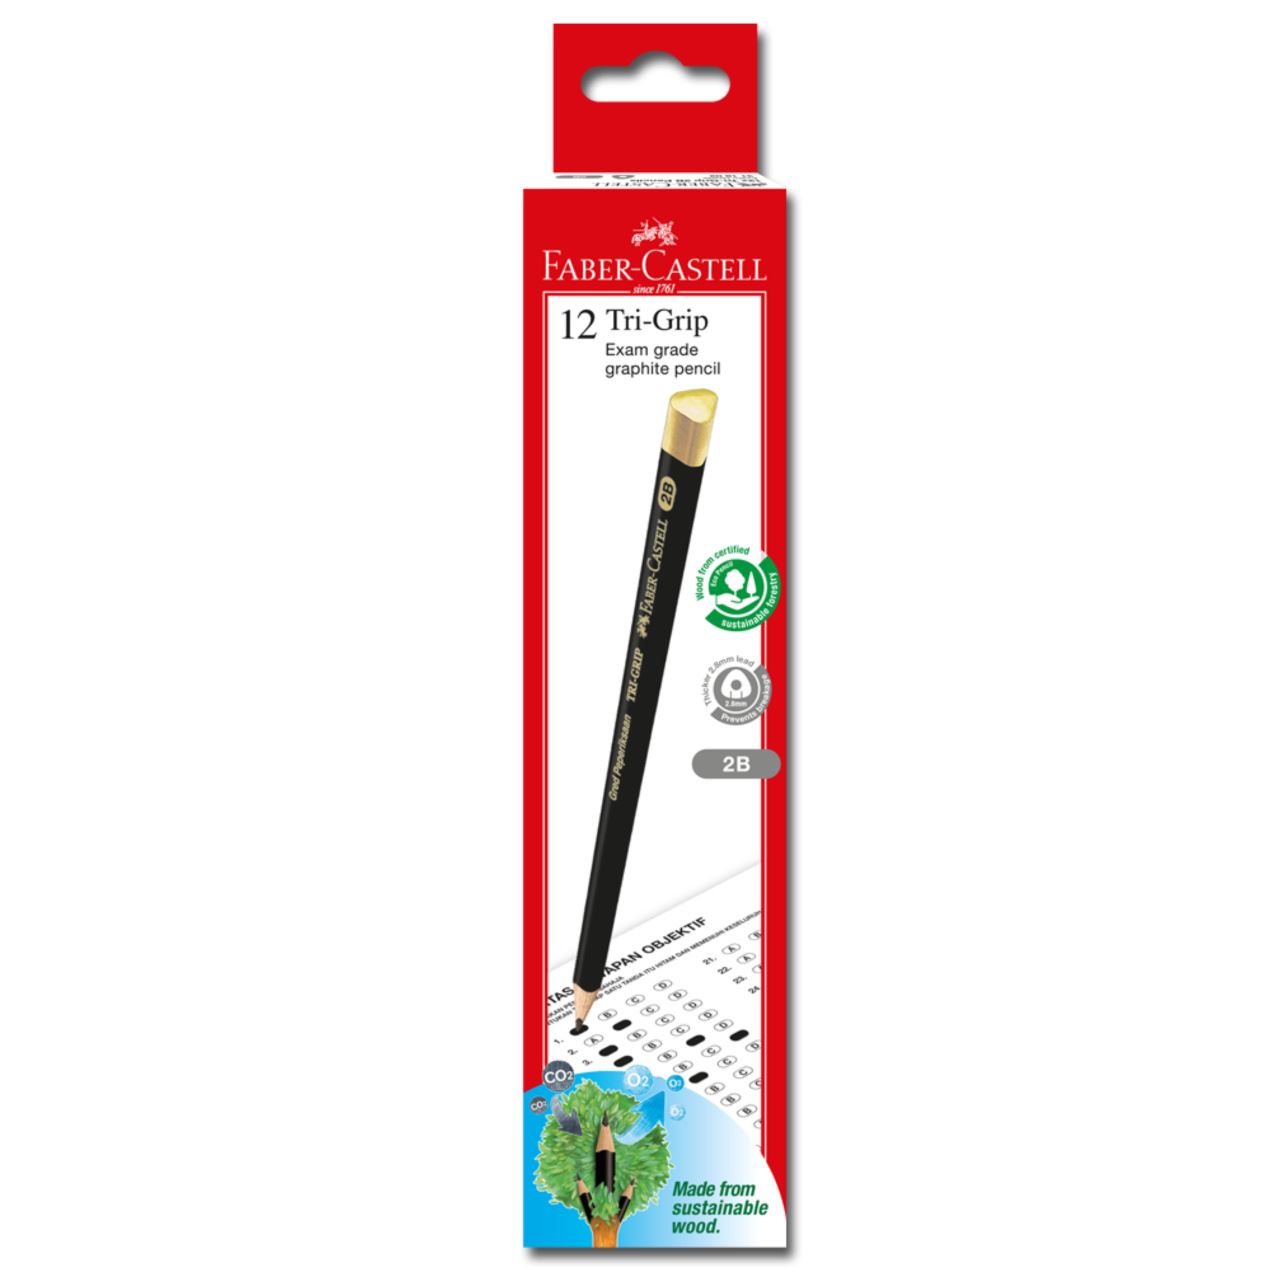 Faber-Castell - Graphite pencil Tri-Grip 2B